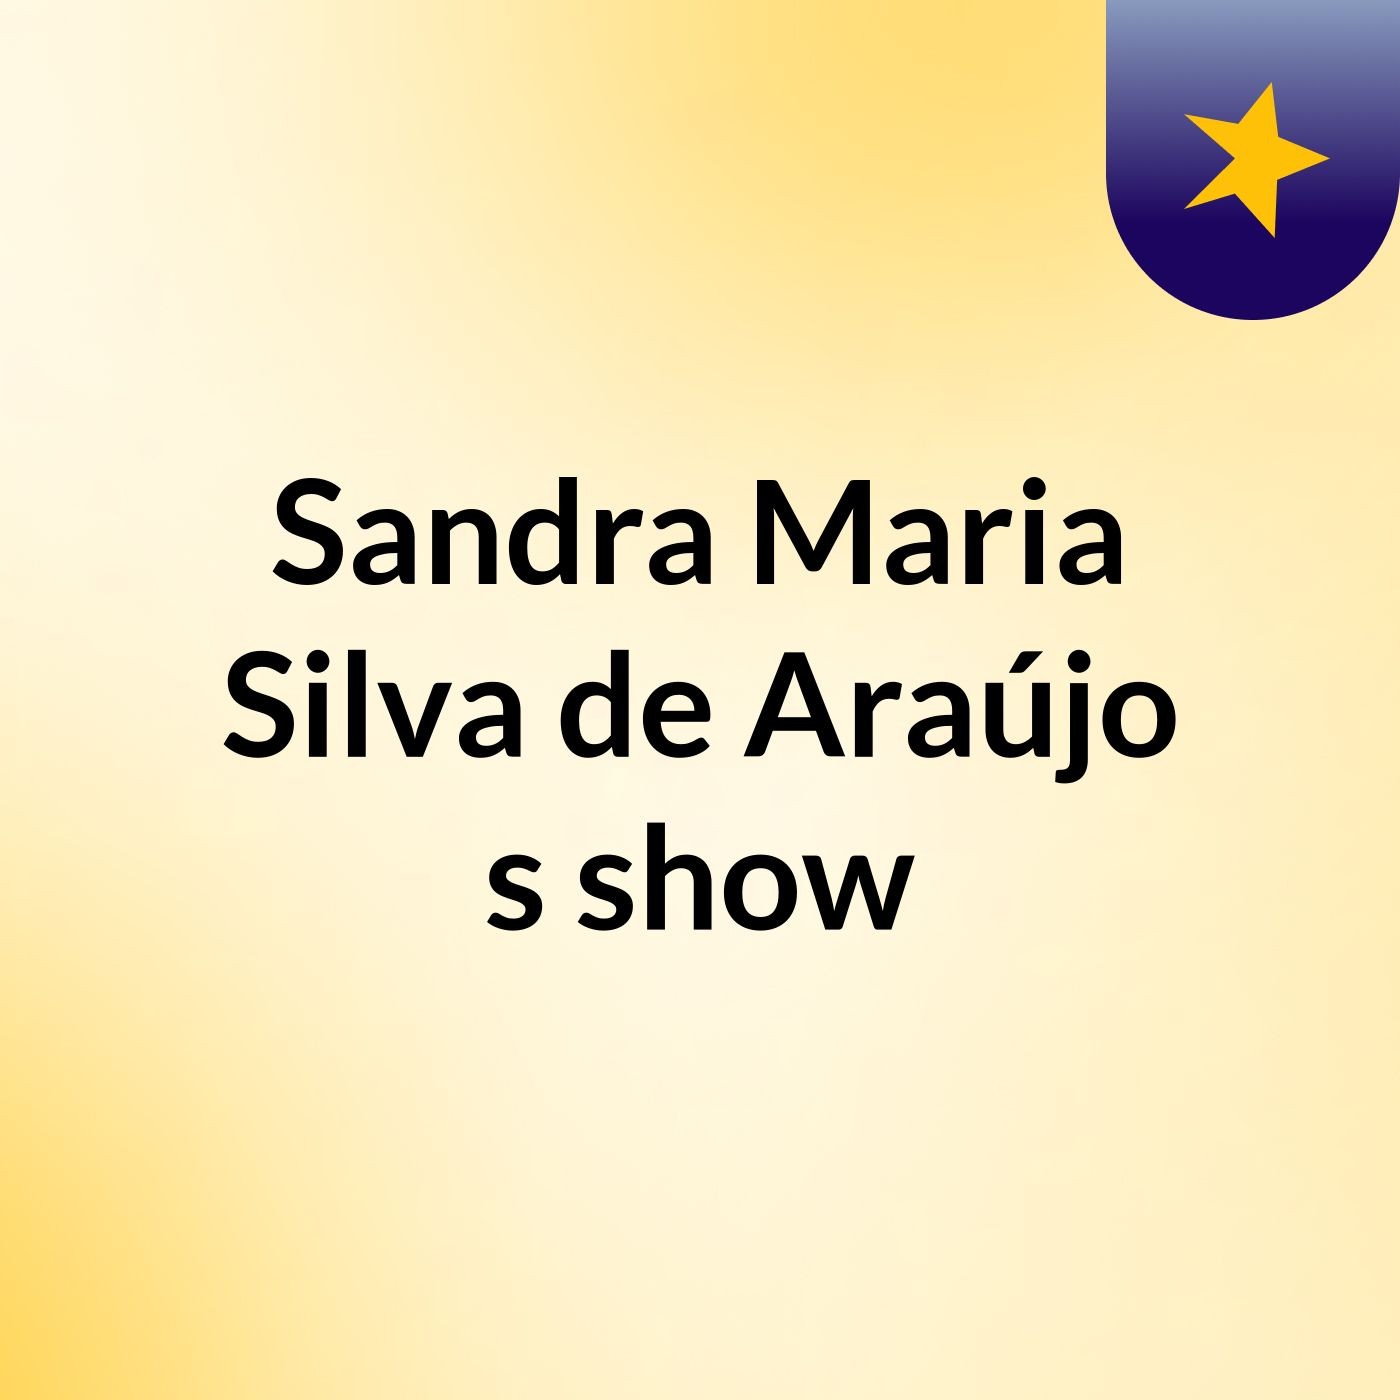 Sandra Maria Silva de Araújo's show